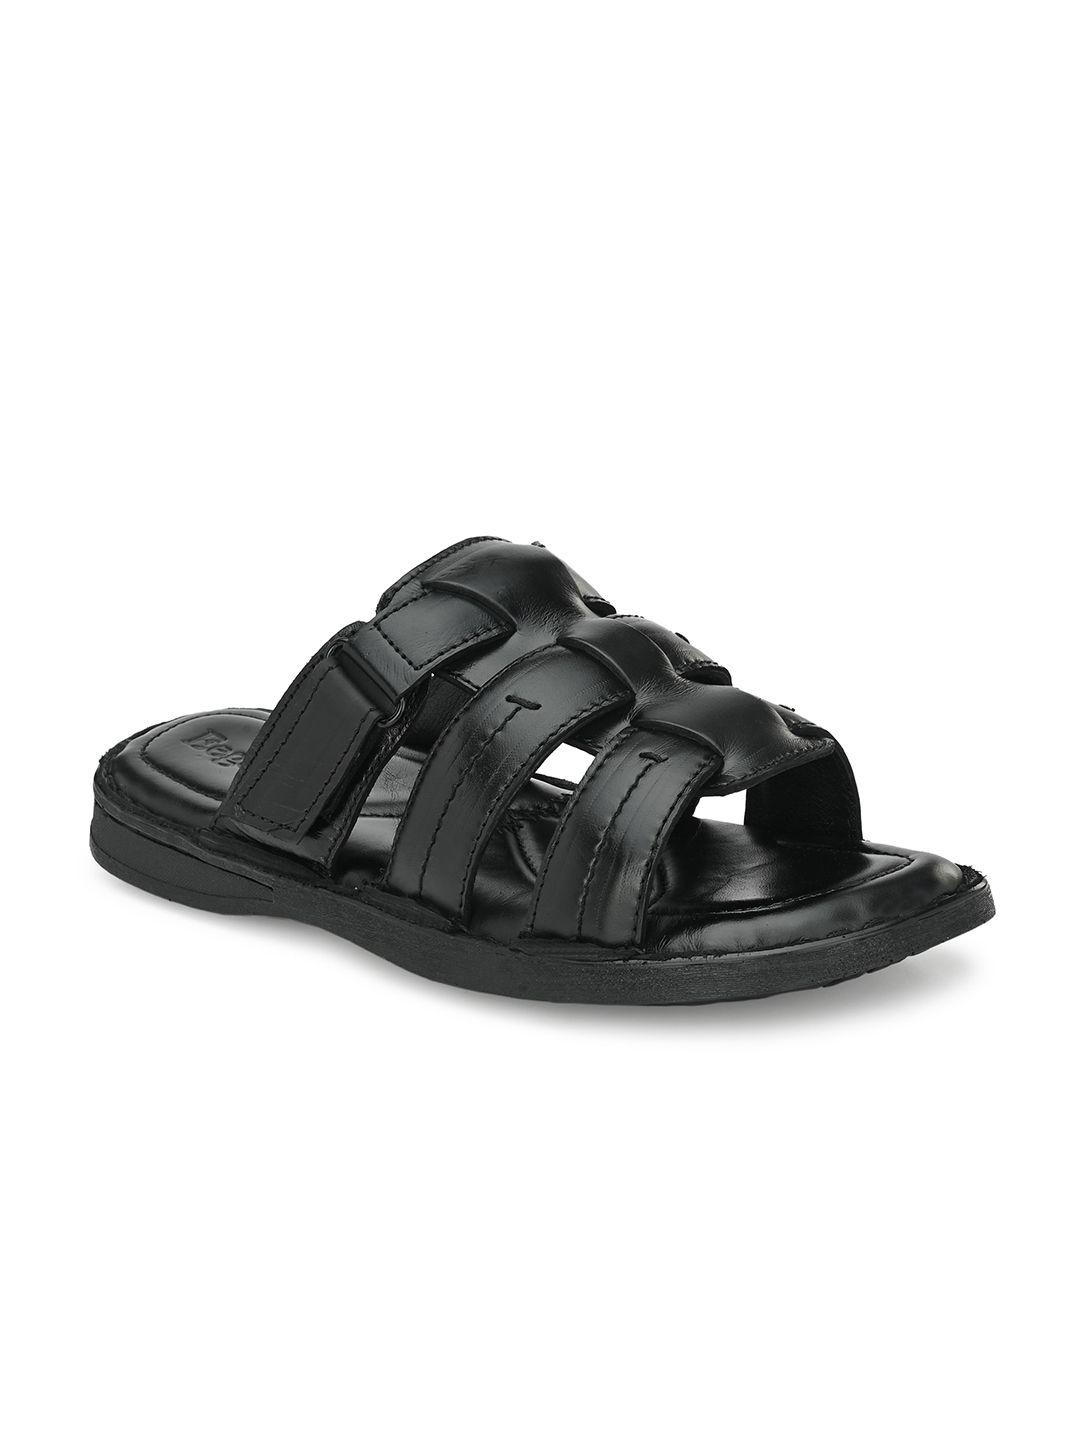 eego italy men leather comfort sandals